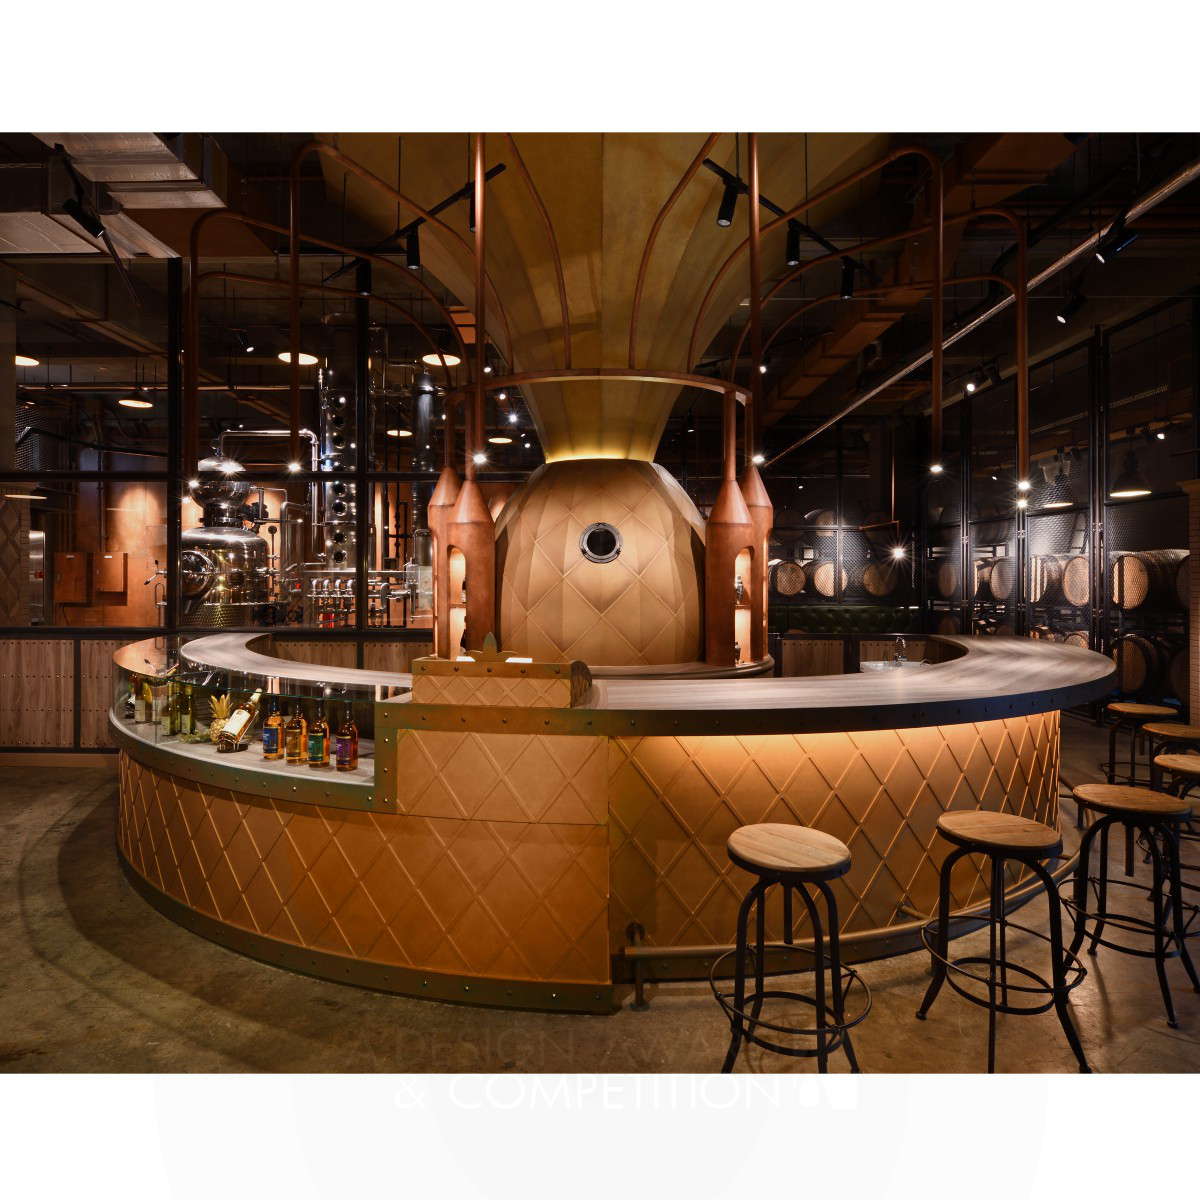 La Pina Distillery: A Fusion of Art, Design, and Innovation